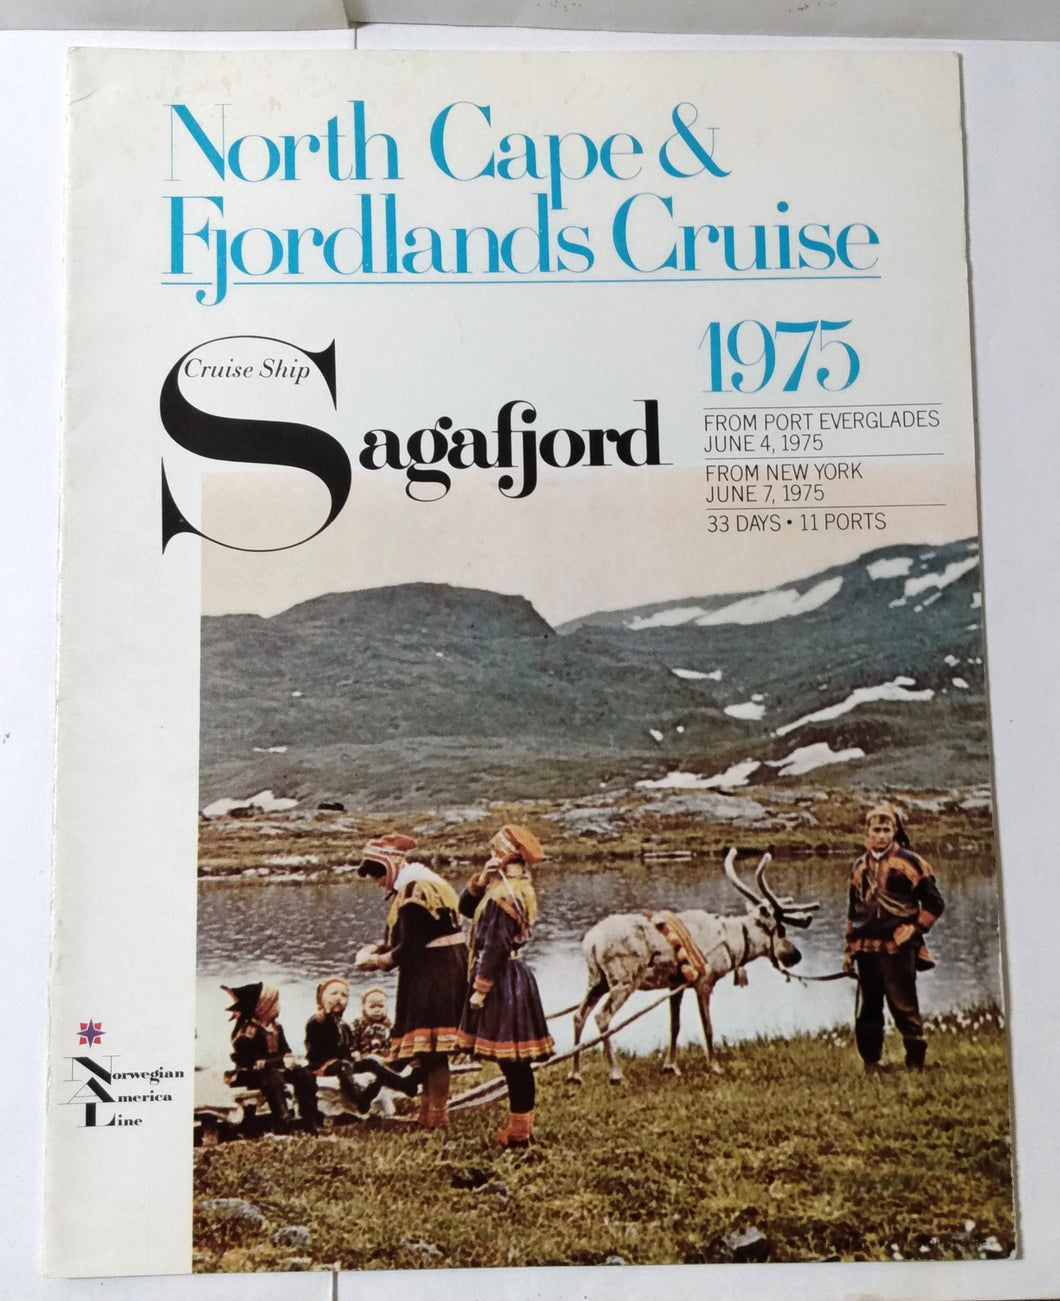 Norwegian America Line ms Sagafjord Fjordlands Cruise 1975 Brochure